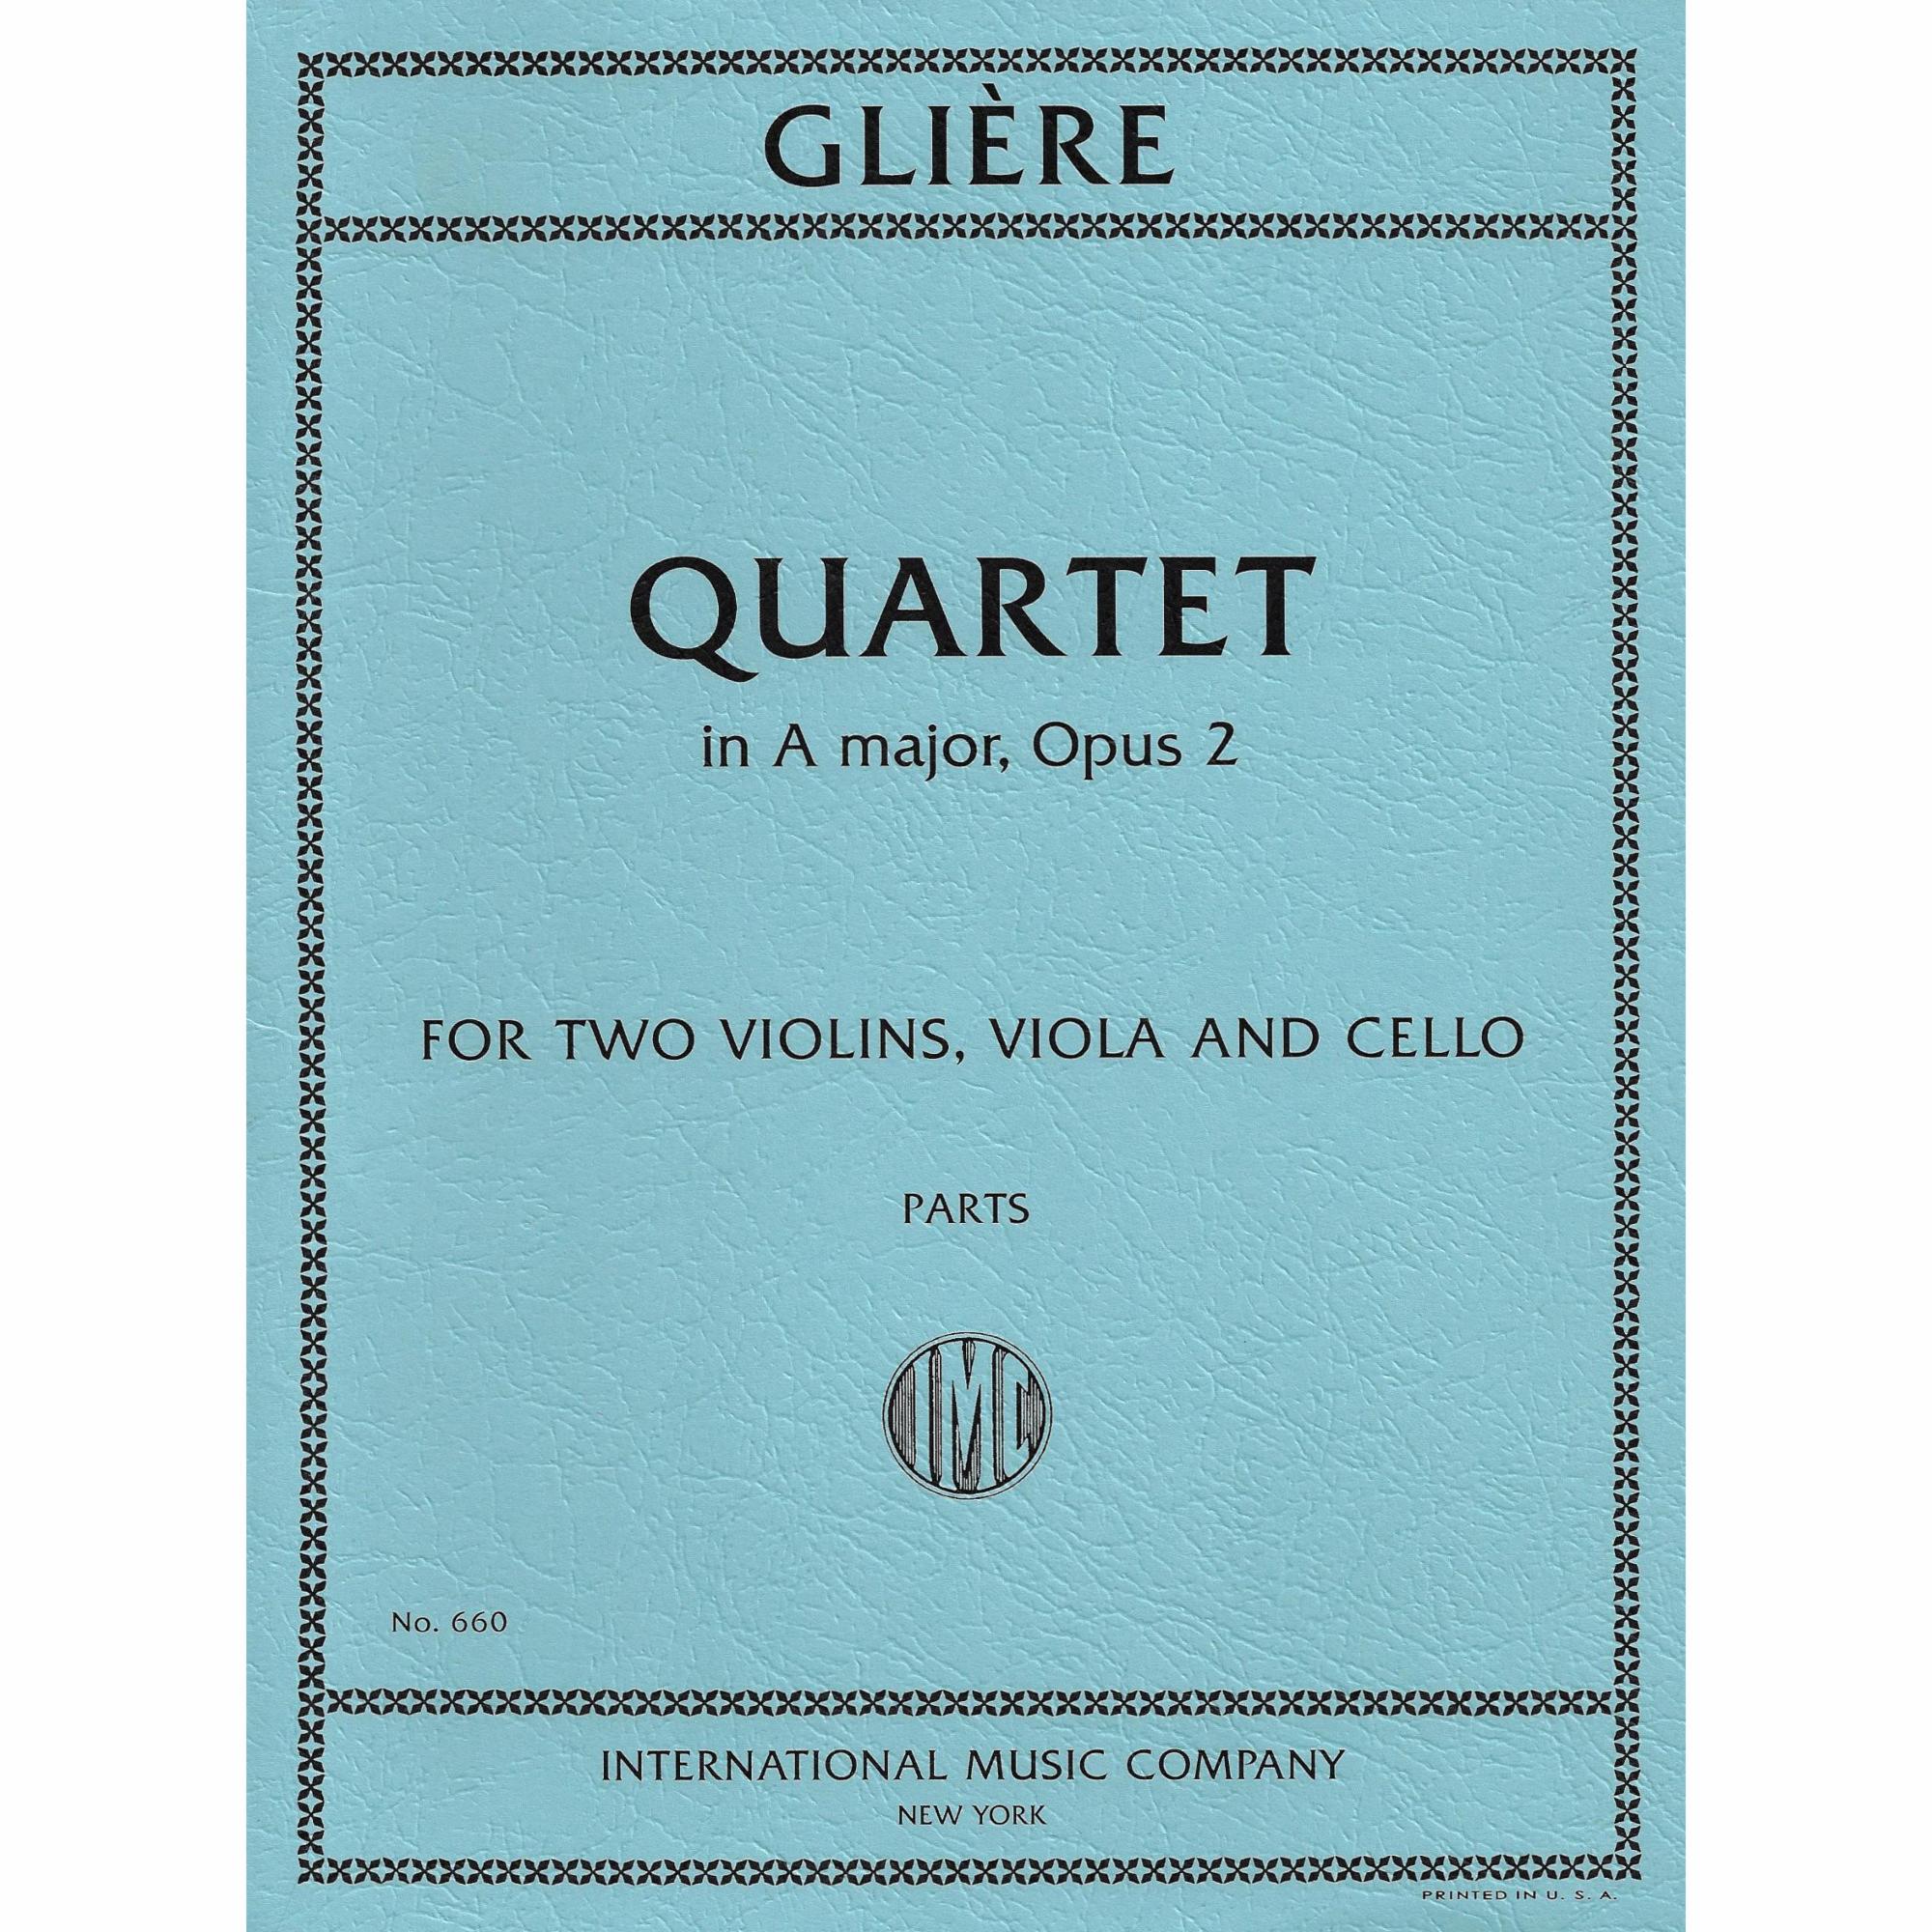 Gliere -- String Quartet in A Major, Op. 2